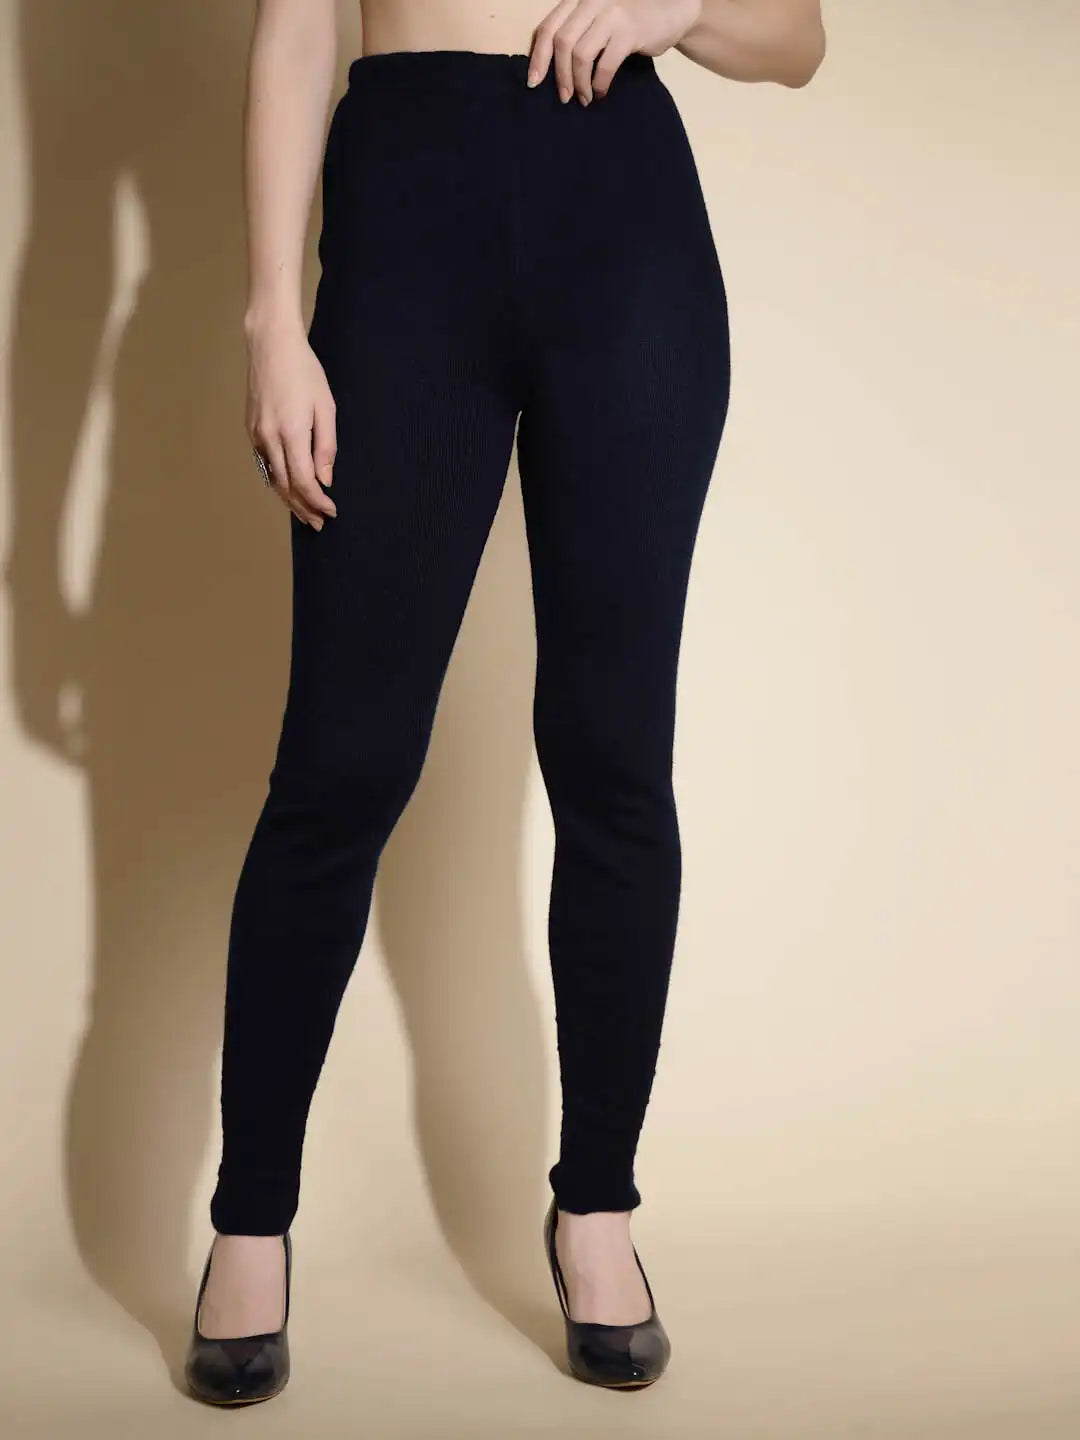 Zelos Woman's Print Leggings Cross Front High waist Sz 1X (New W/ Tags)